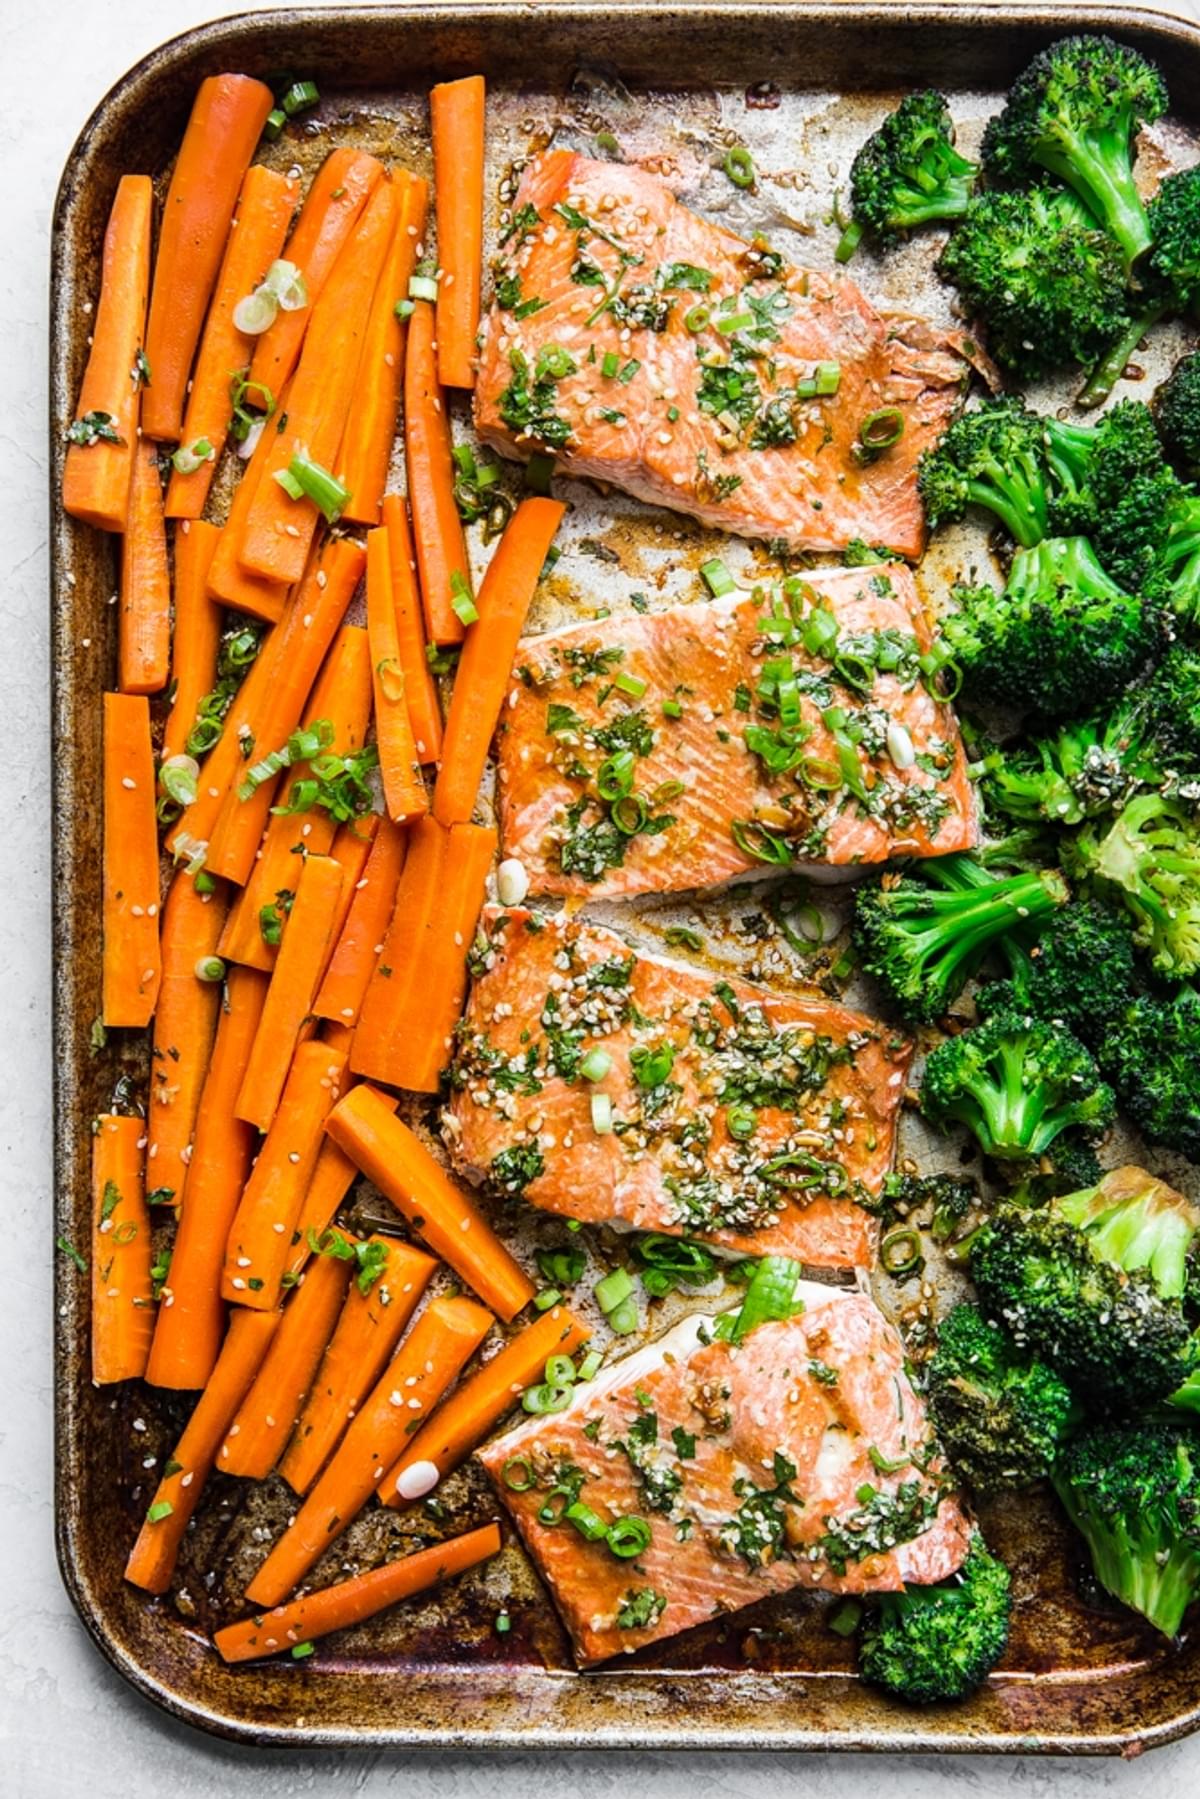 Baking sheet with carrots, salmon and broccoli with a teriyaki sauce